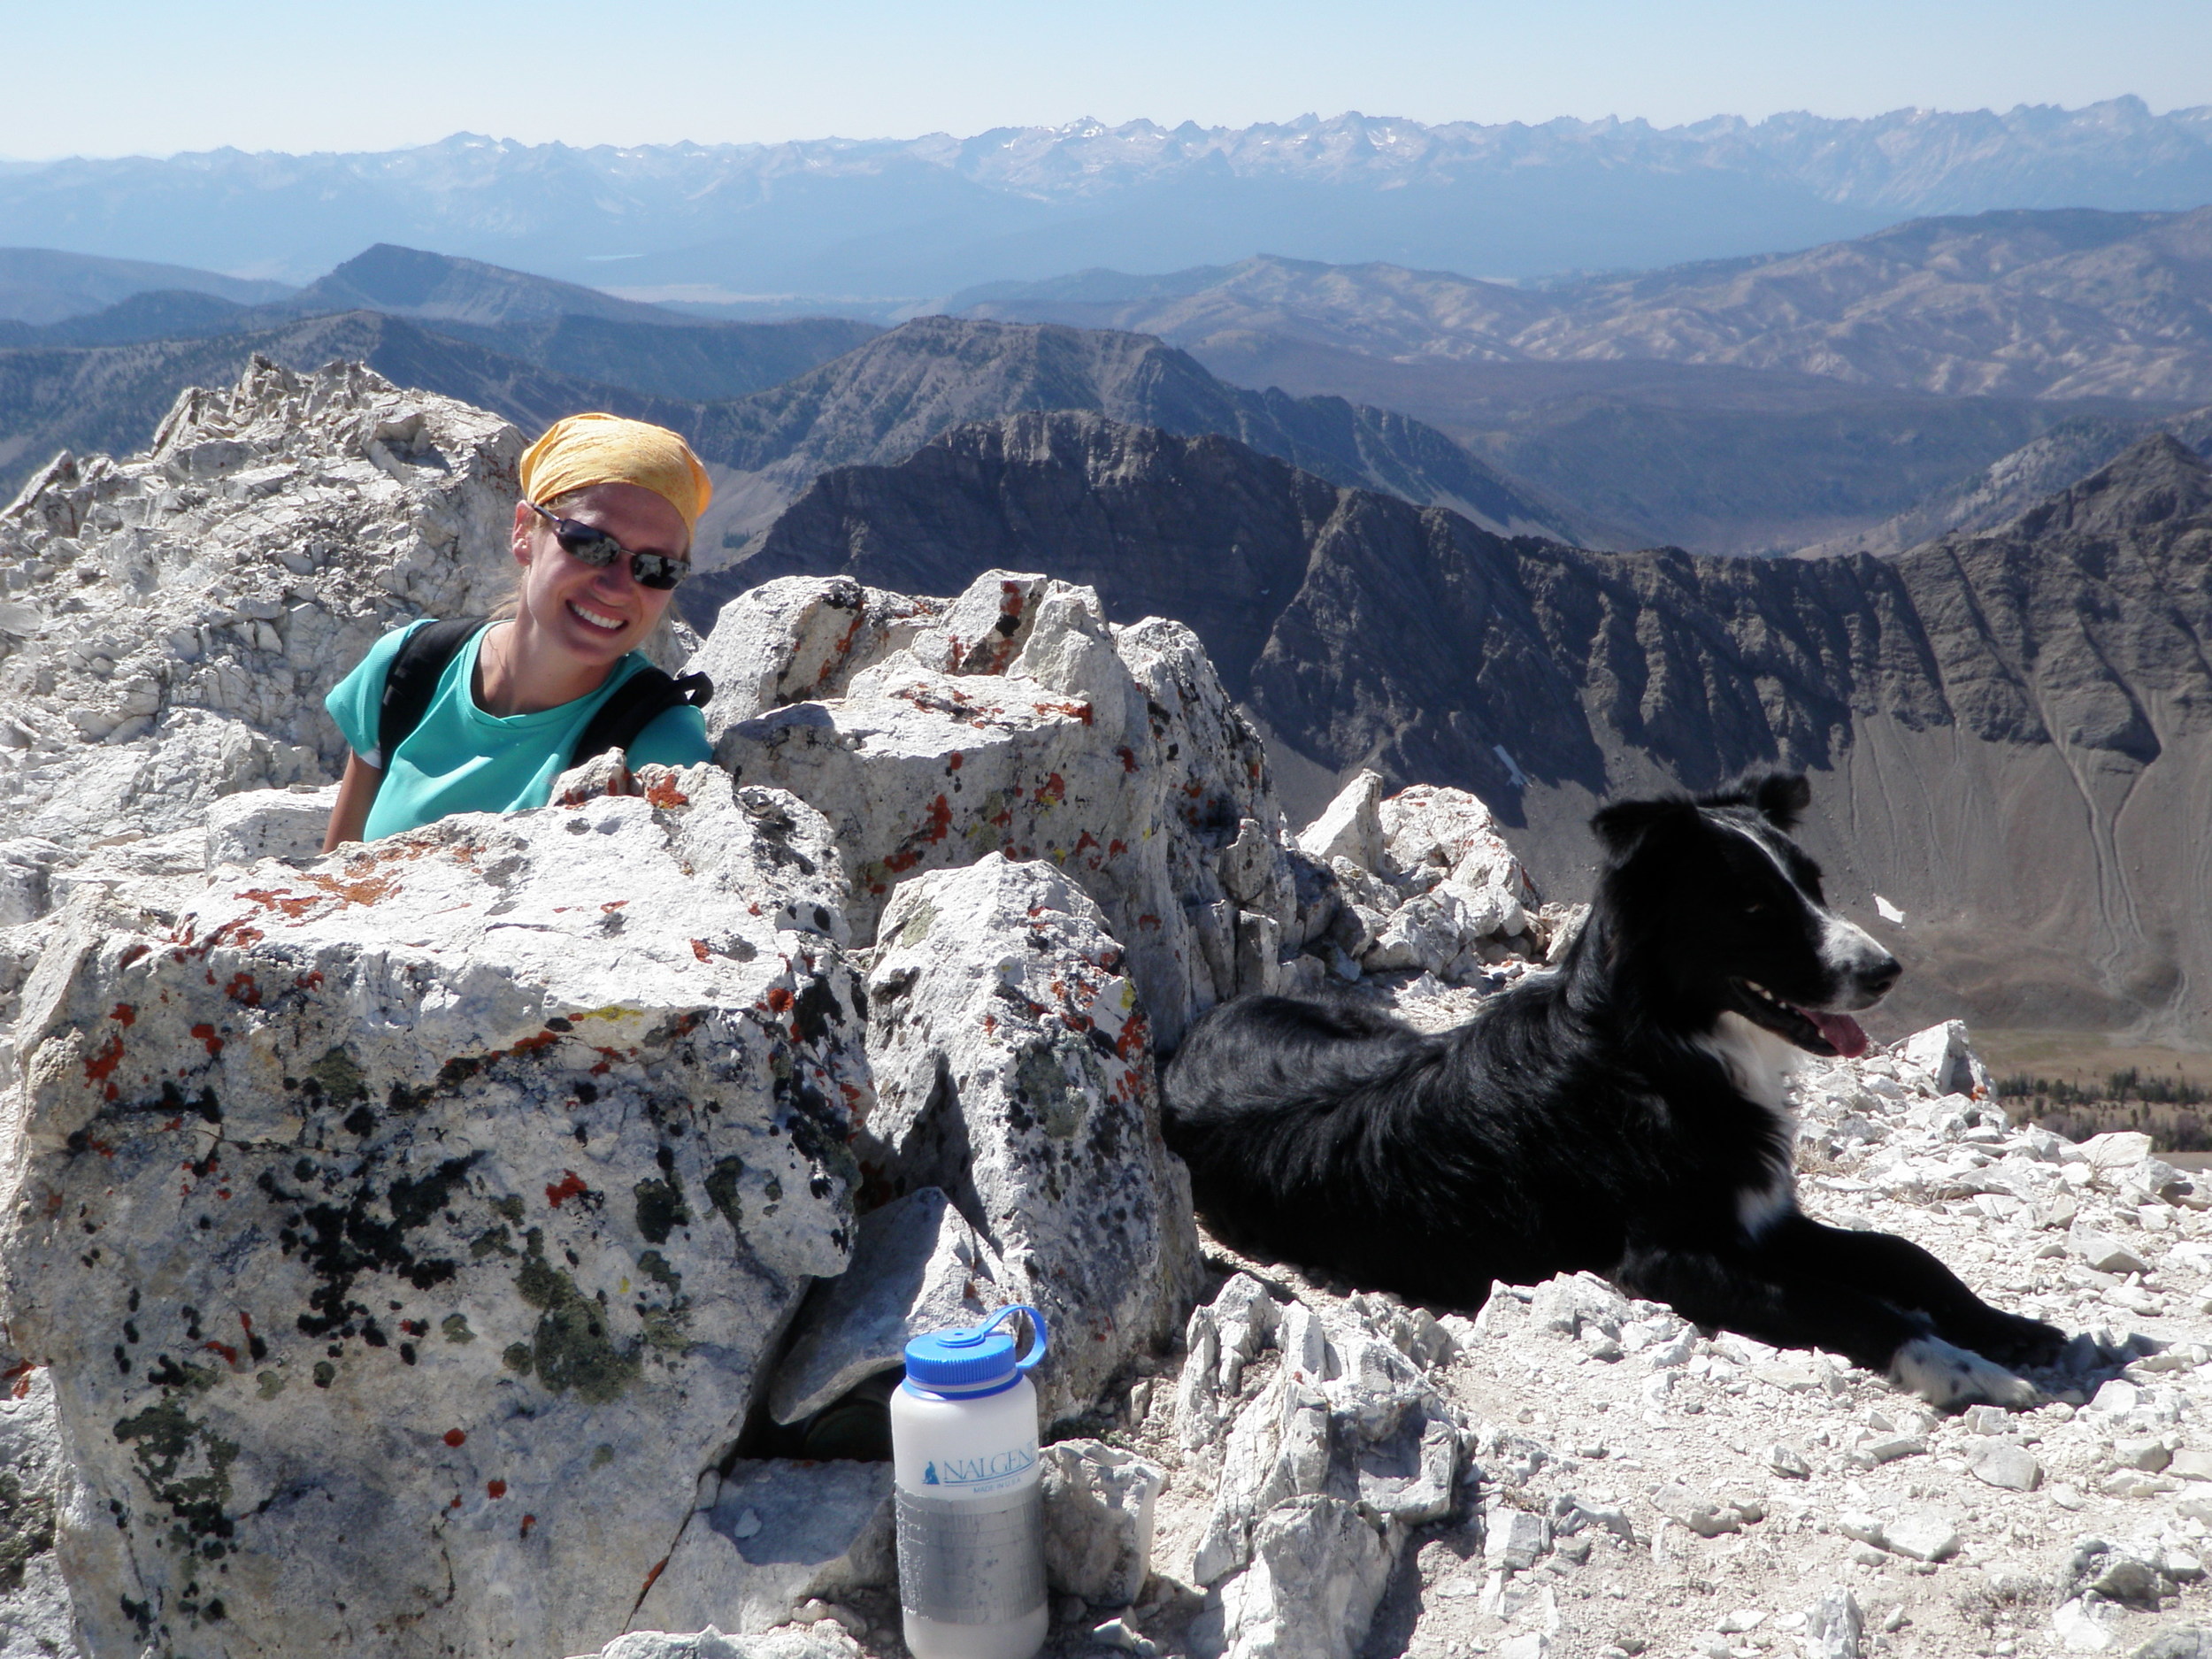 Betsie & Laddi at 11,200 feet in the Boulder White Clouds